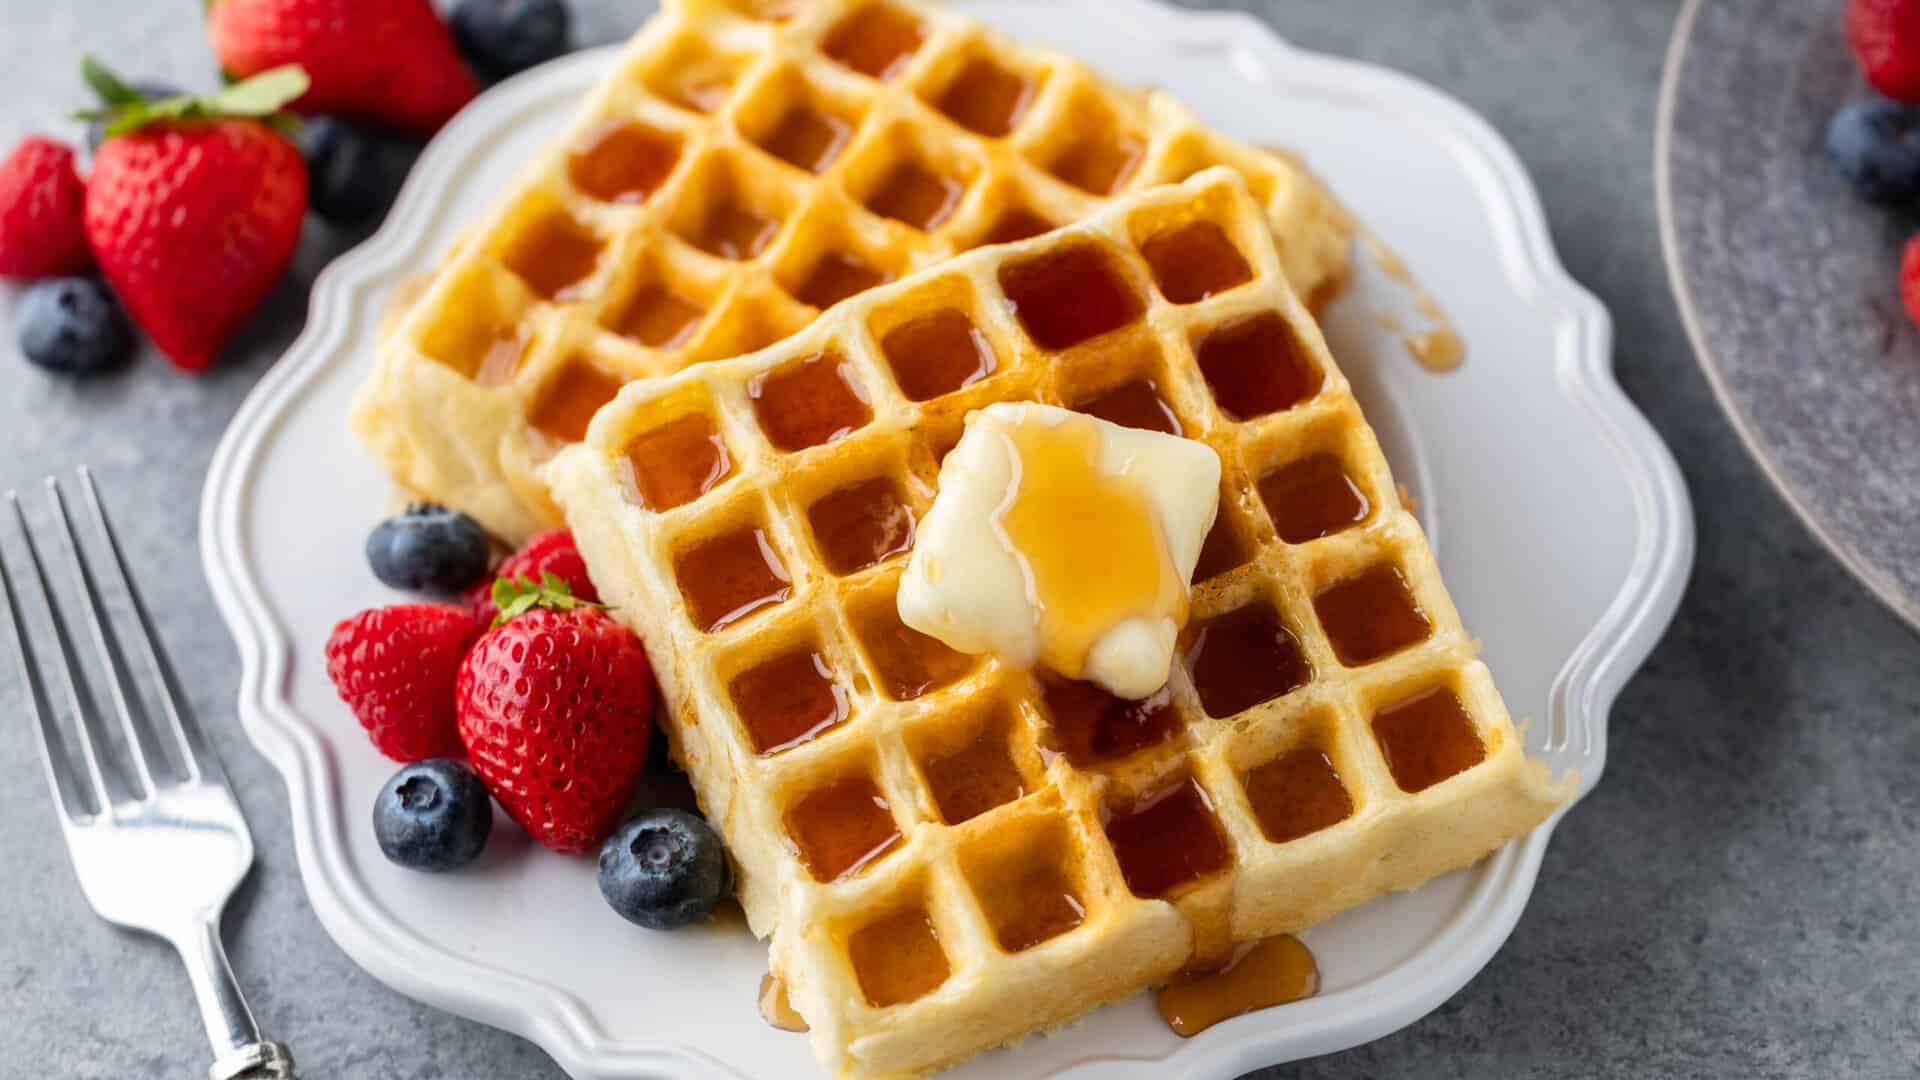 Mini Waffles (Simple, Easy, Tasty & Fun!) - Heavenly Home Cooking